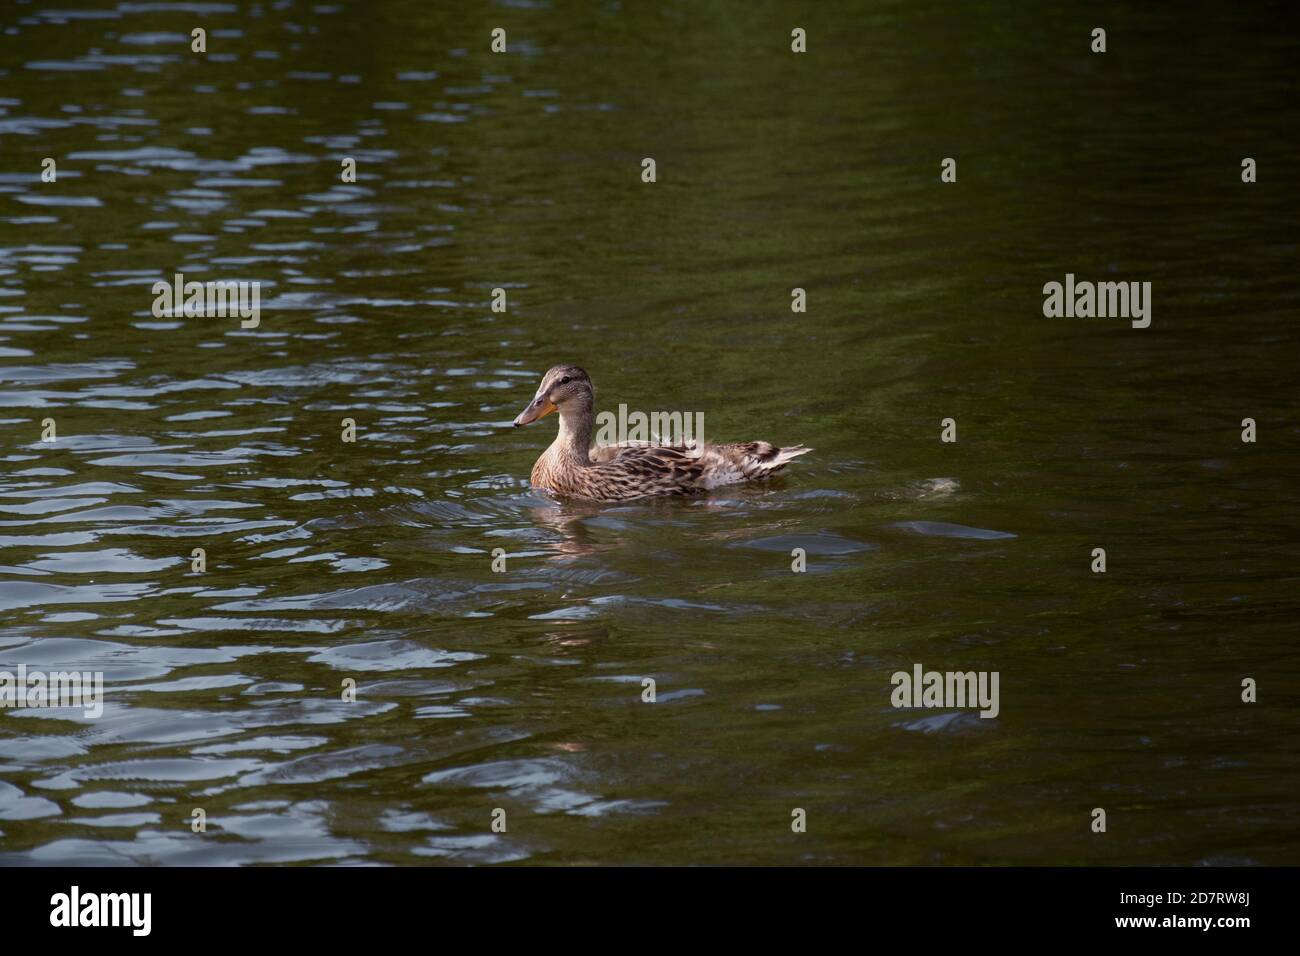 A brown, female mallard duck swimming in greenish water and sunlight Stock Photo